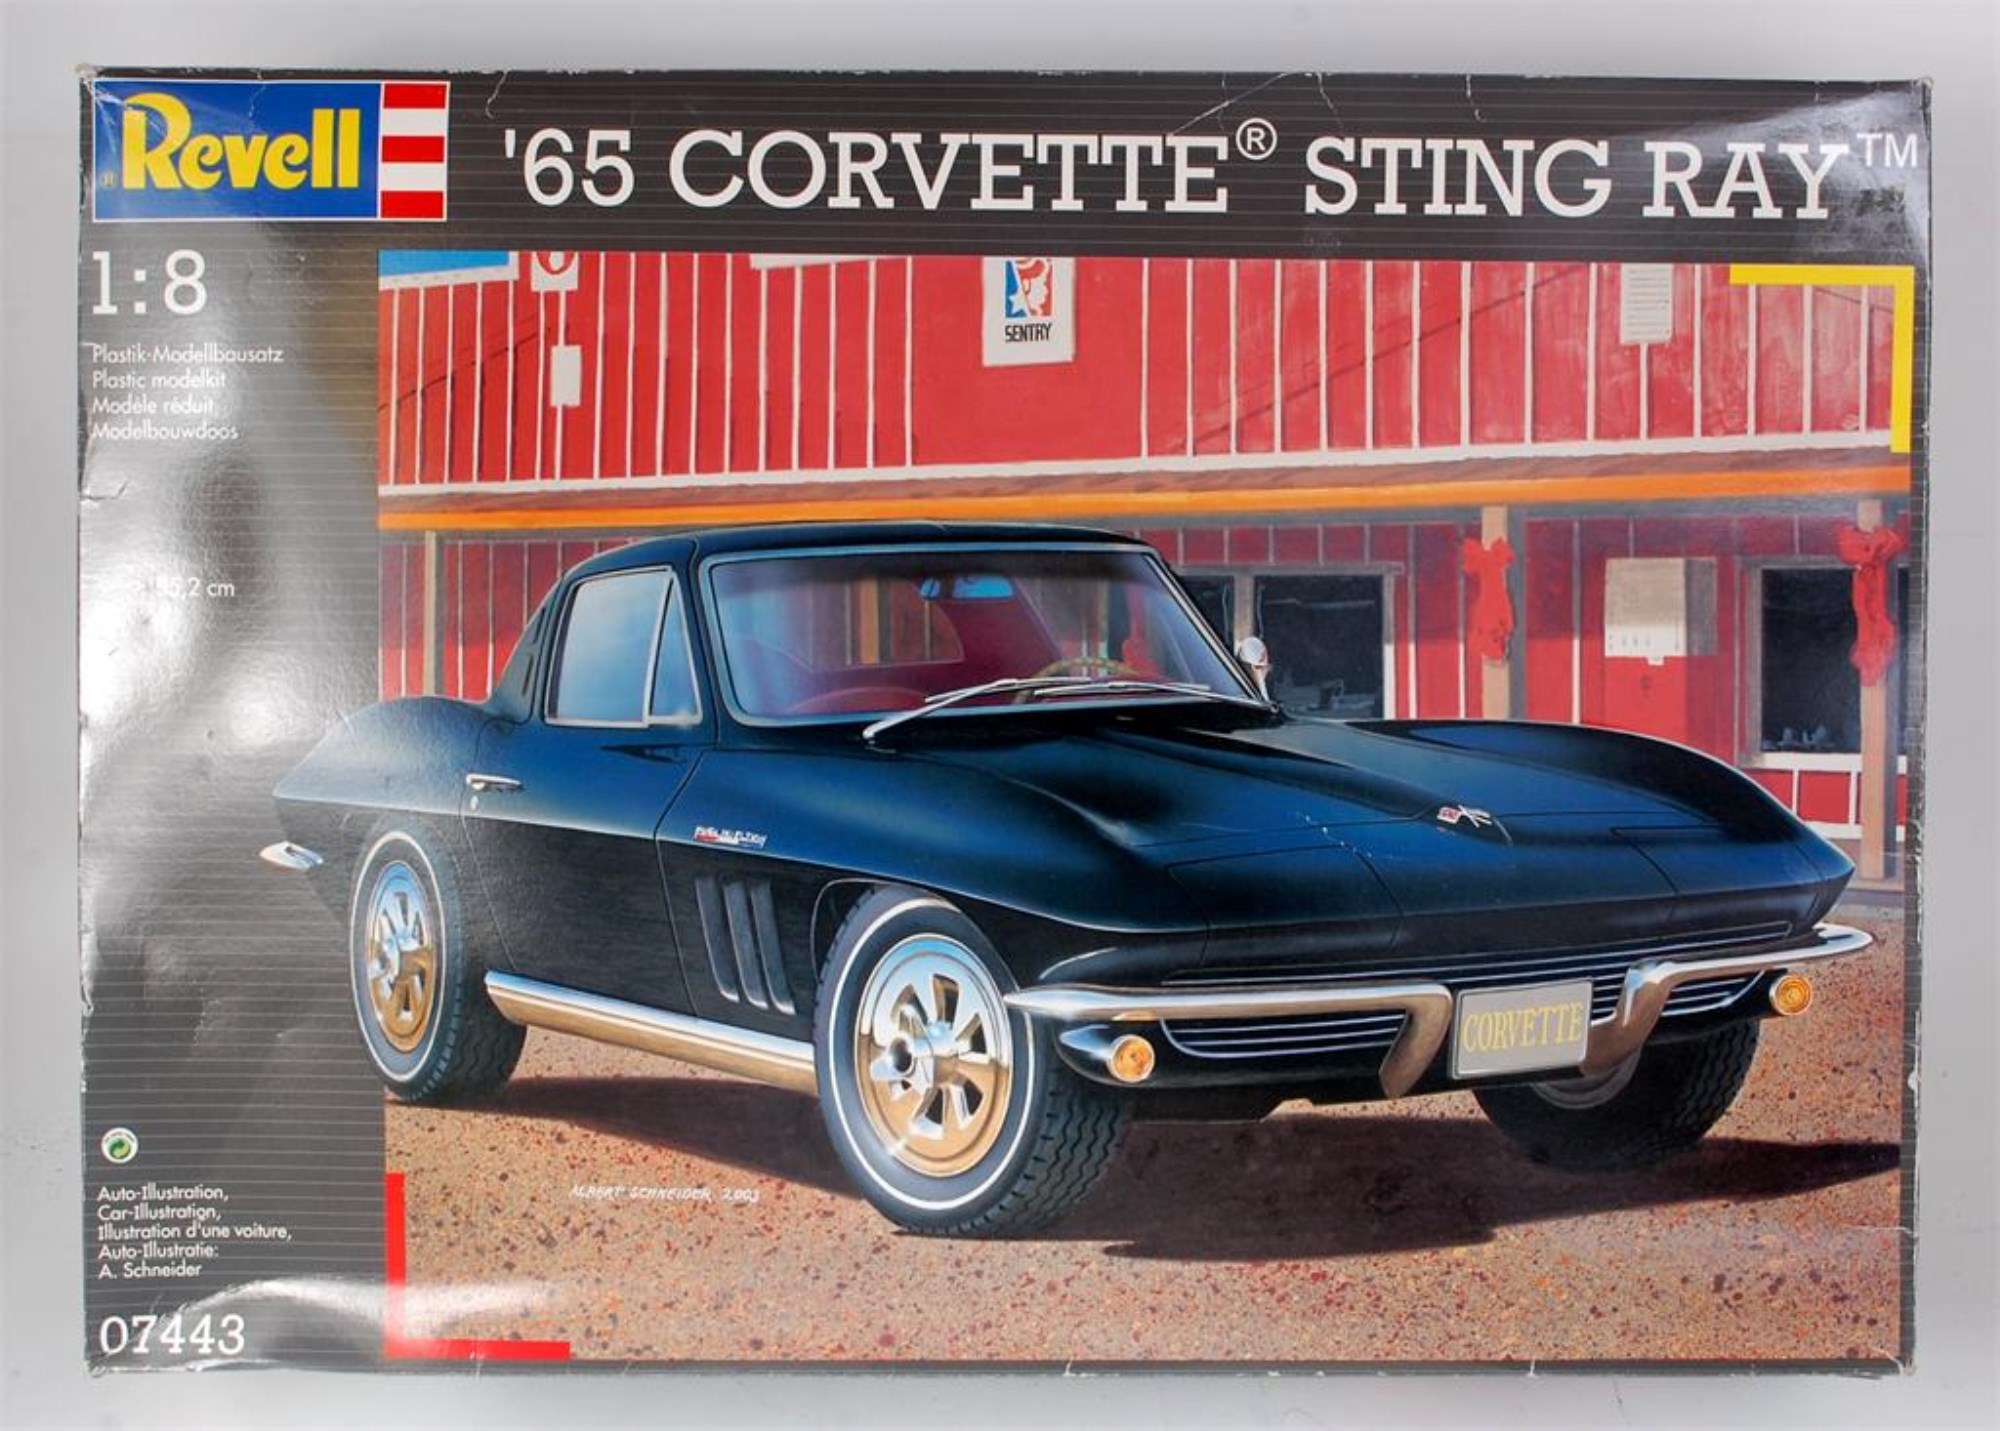 Corgi Toys -Chevrolet Corvette Sting Ray No. 310- Vintage Car Diecast  Model, Box — PM Antiques & Collectables